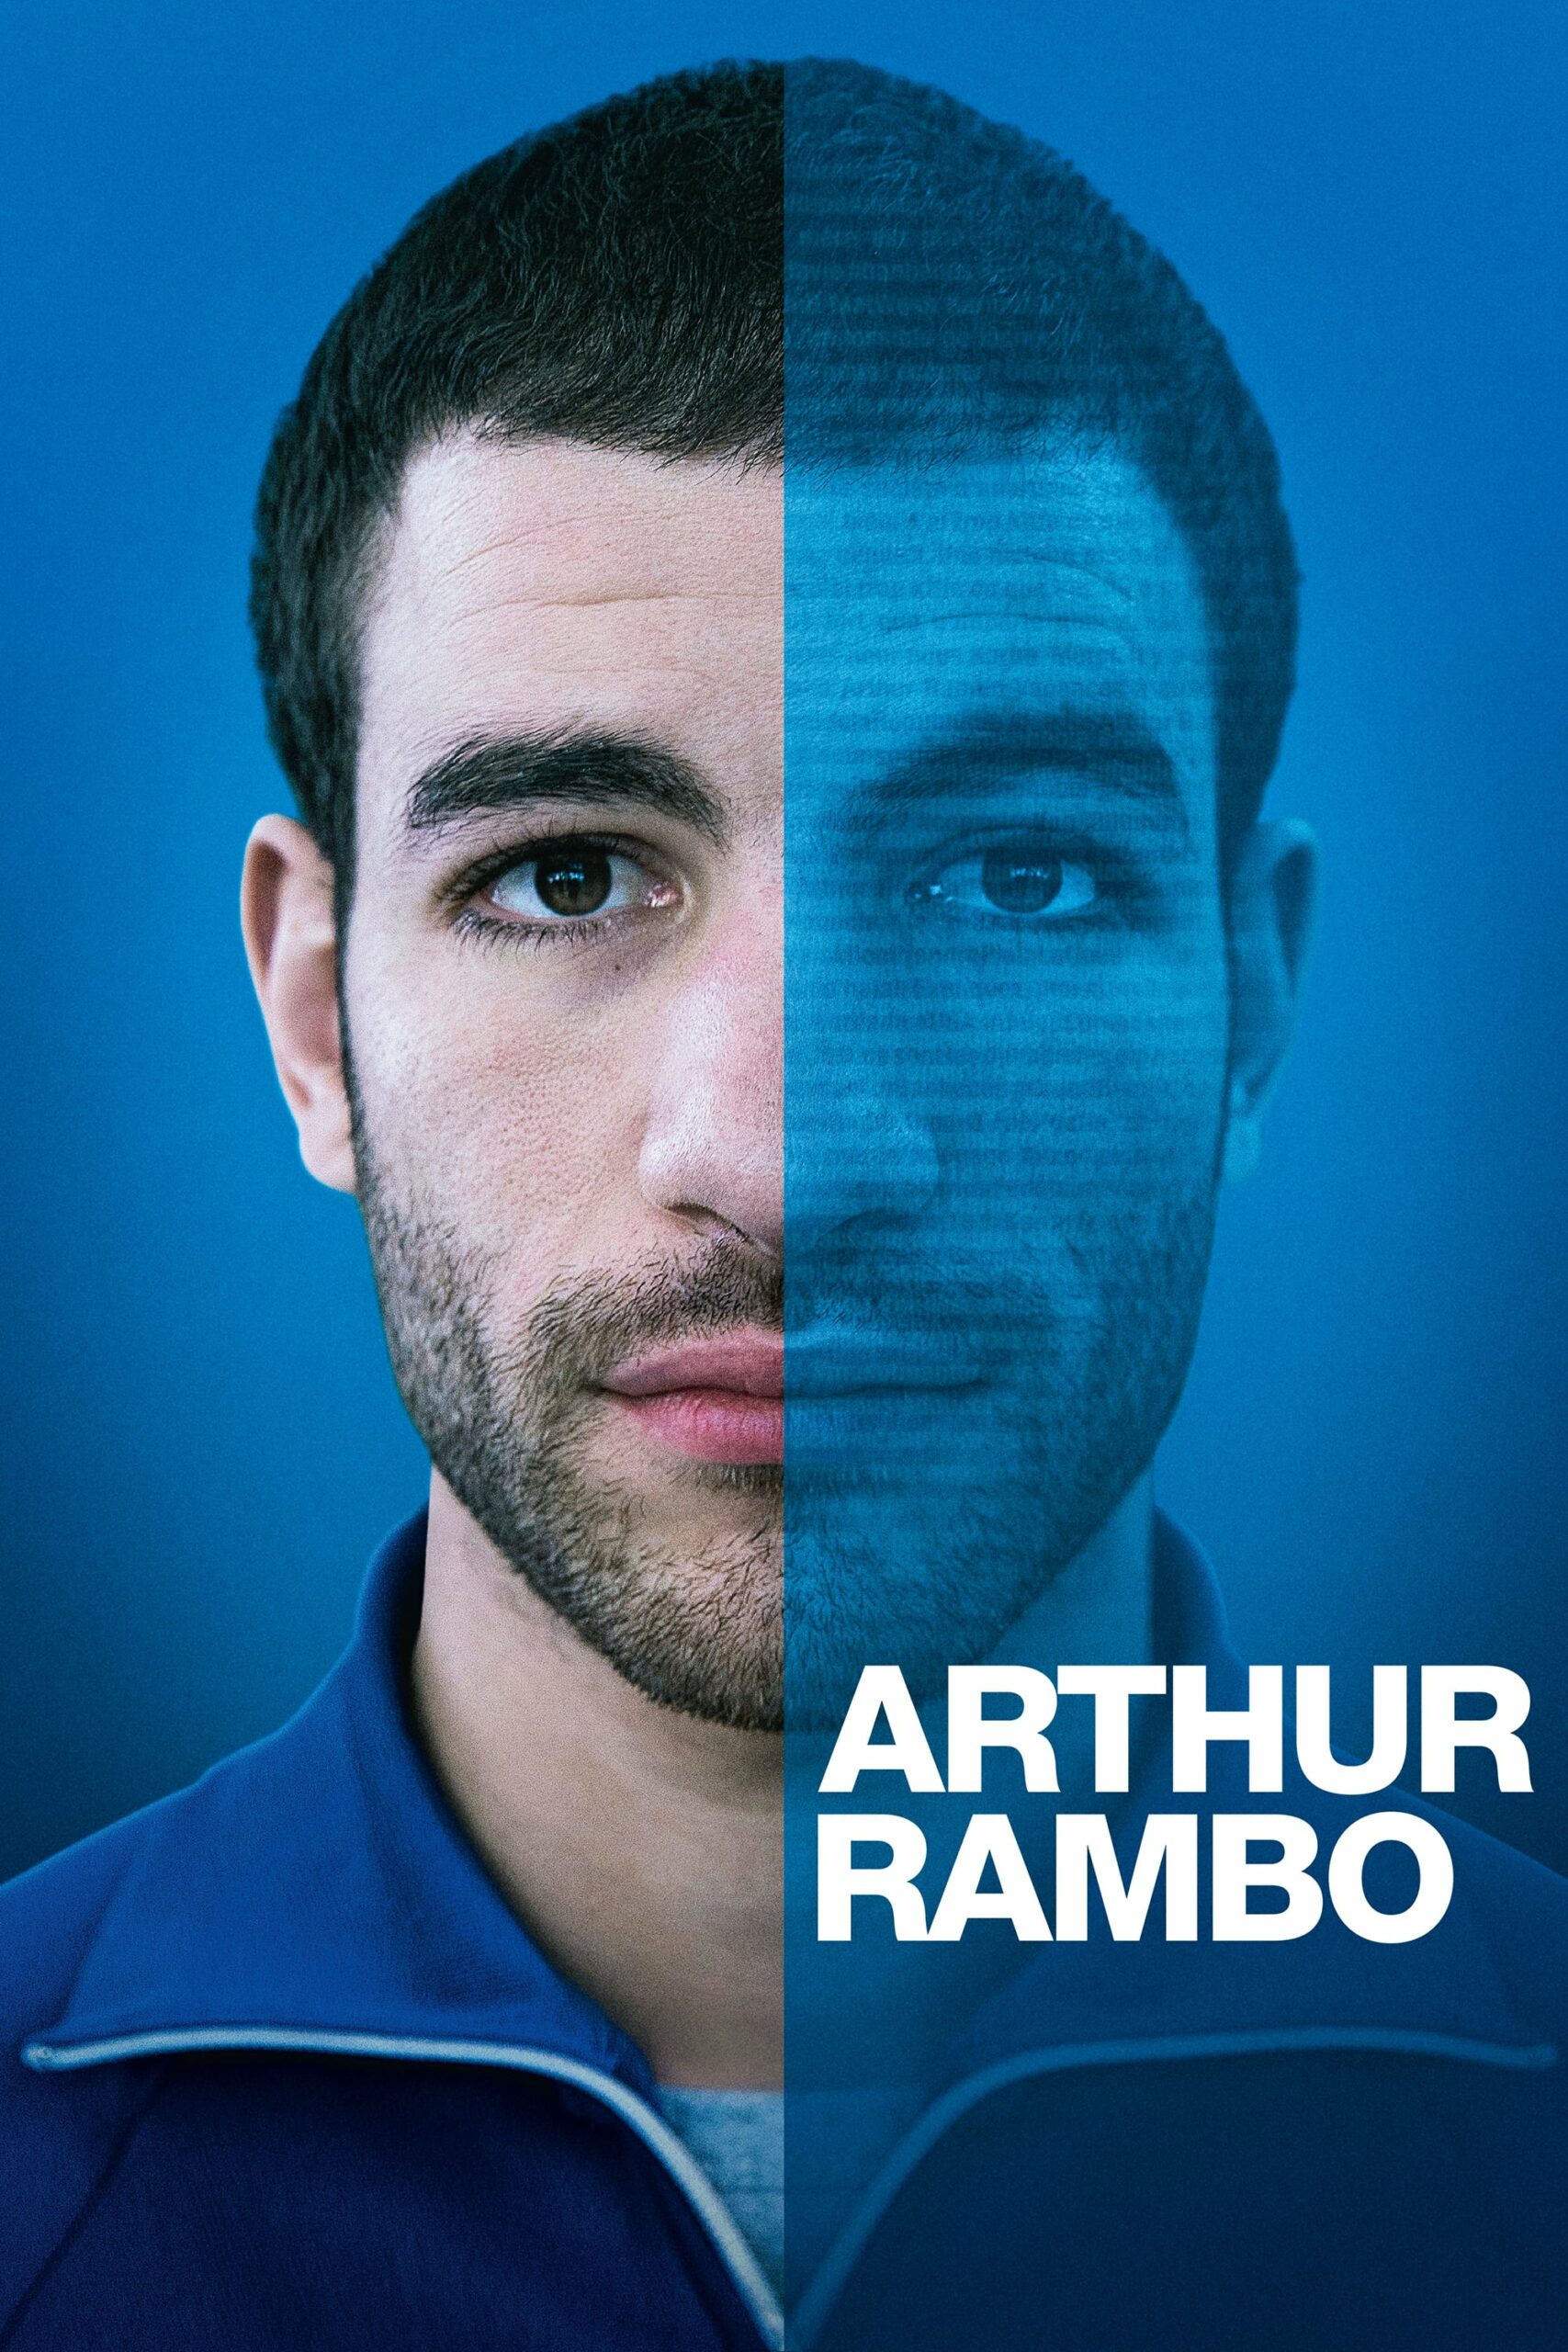 Affiche du film "Arthur Rambo"